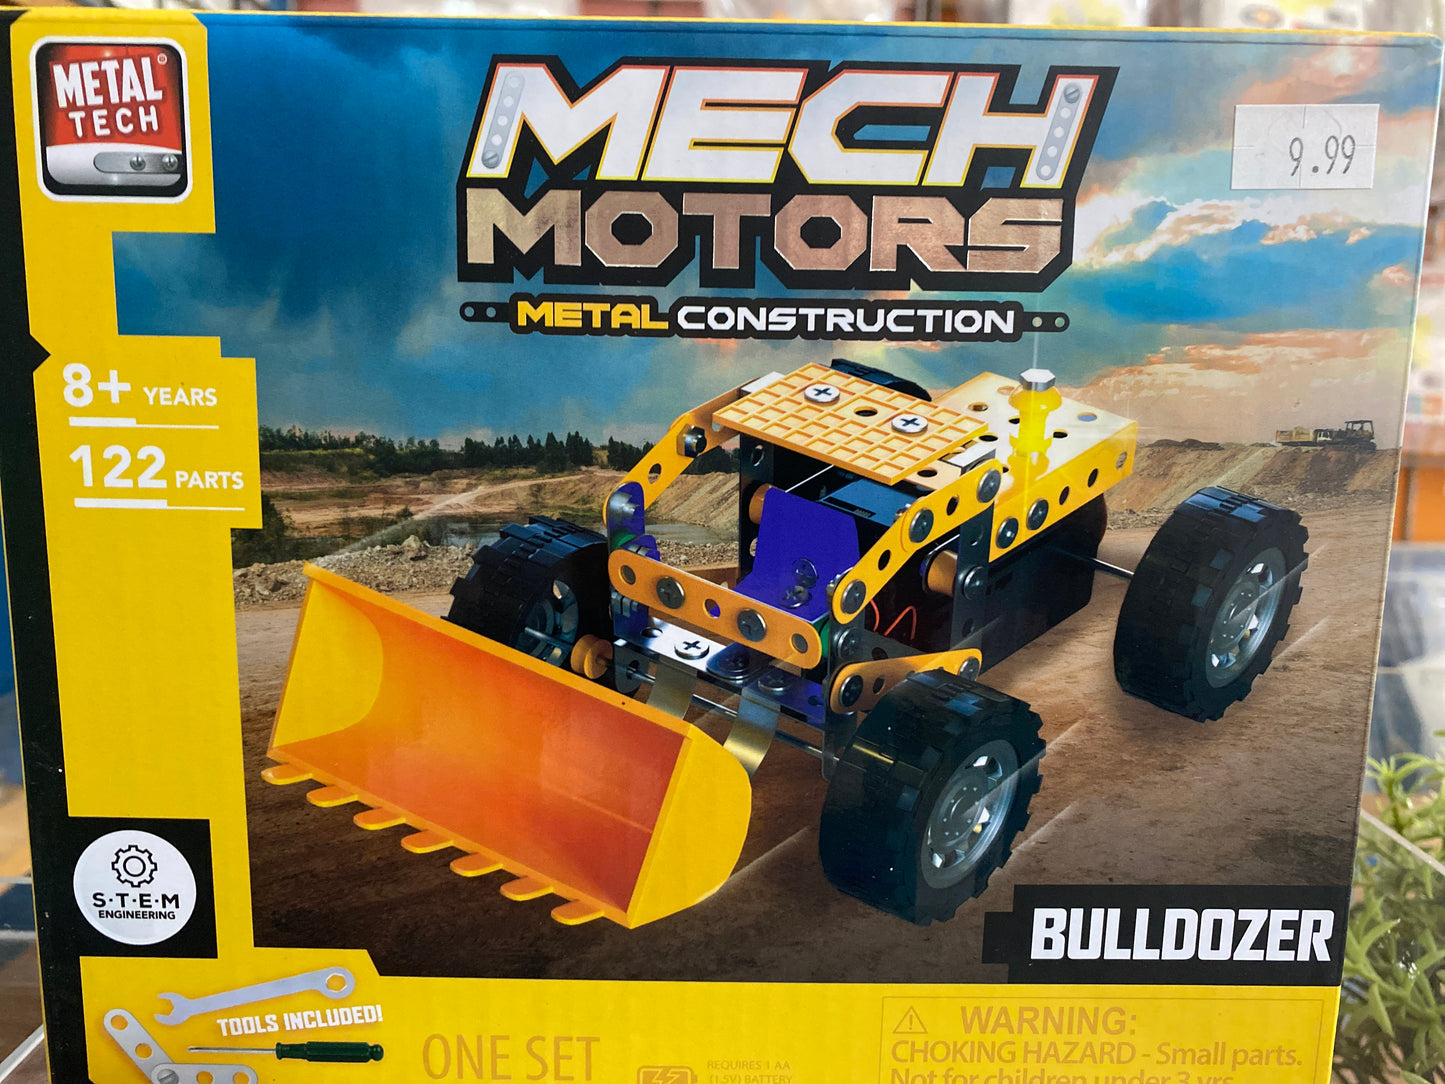 Mech Motors